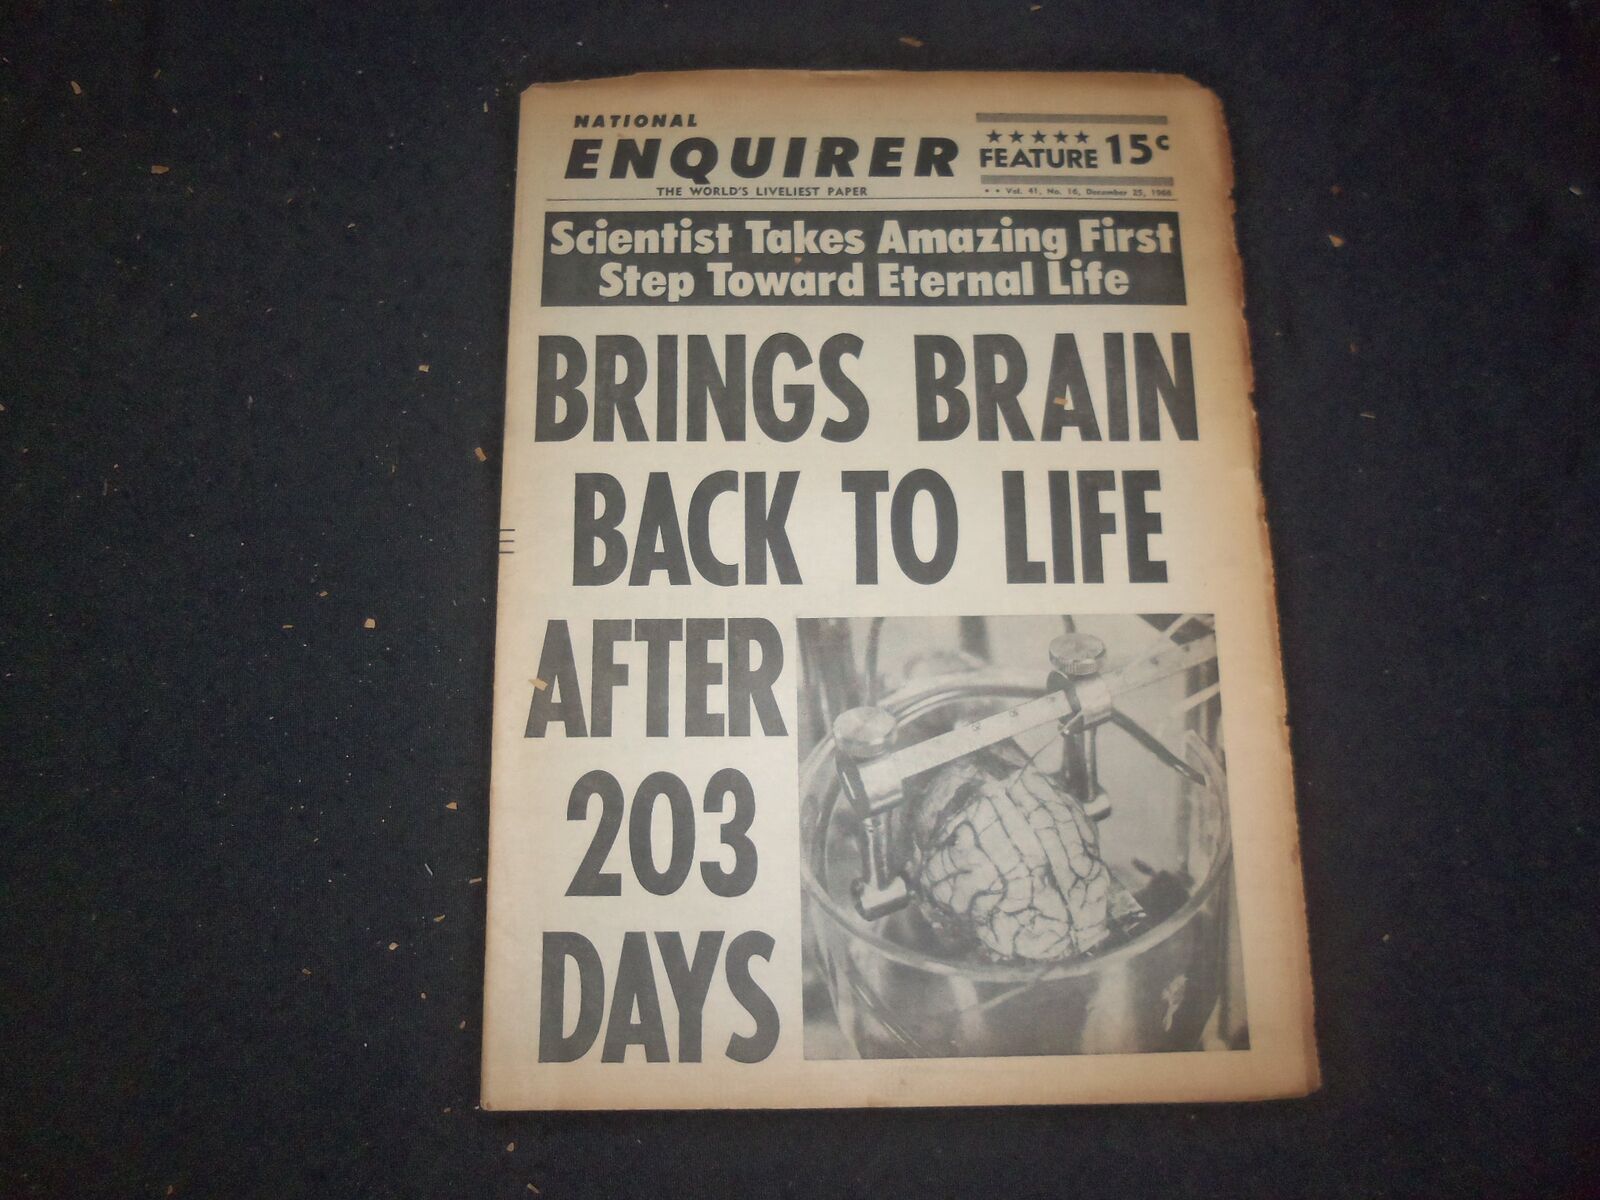 1966 DEC 25 NATIONAL ENQUIRER NEWSPAPER - BRINGS BRAIN BACK TO LIFE - NP 7433